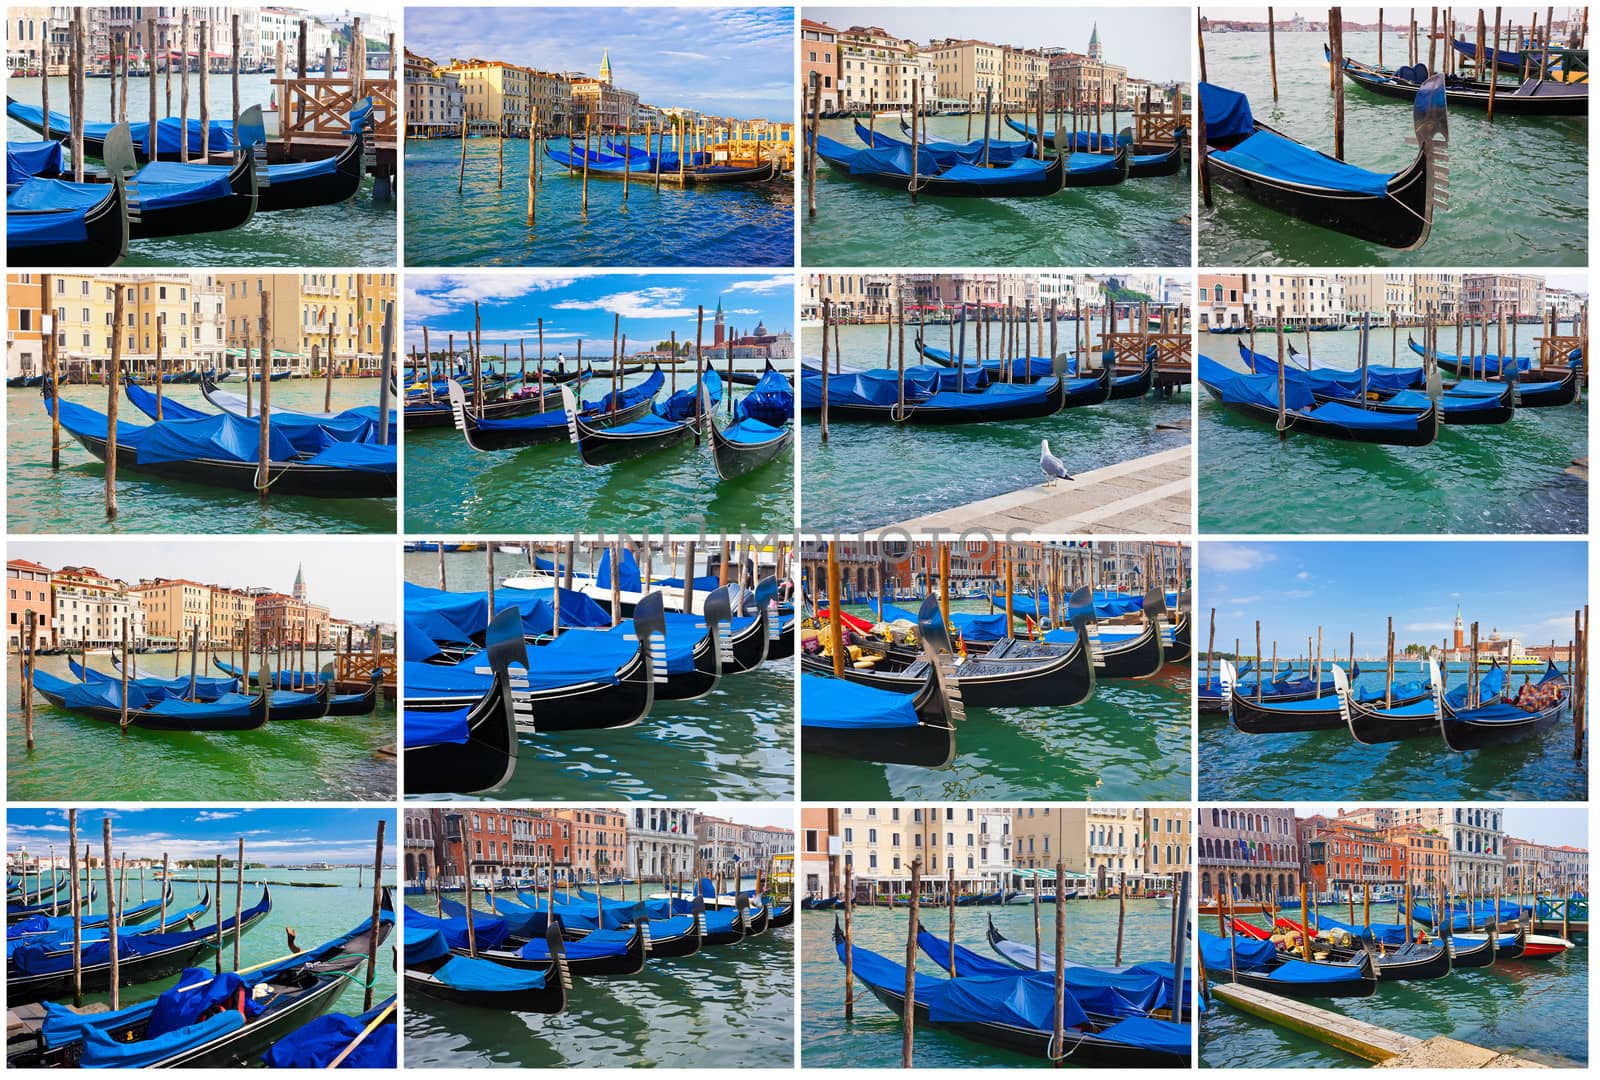 Gondolas in Venice by sailorr